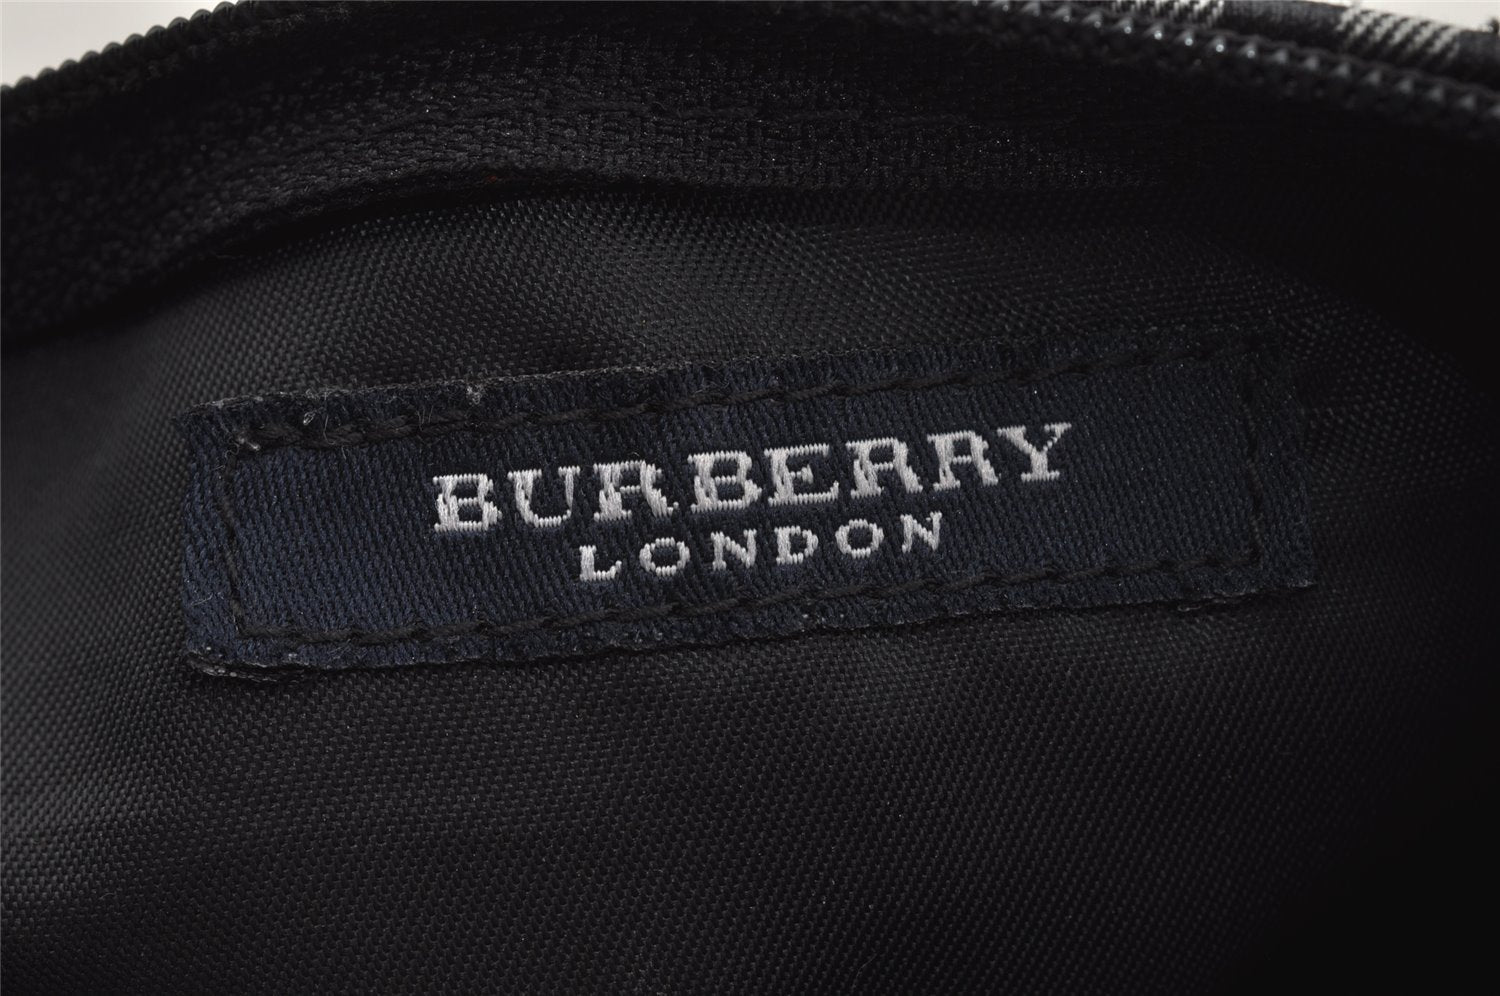 Authentic BURBERRY Vintage Check Hand Bag Pouch Purse Nylon Leather Black 3599J